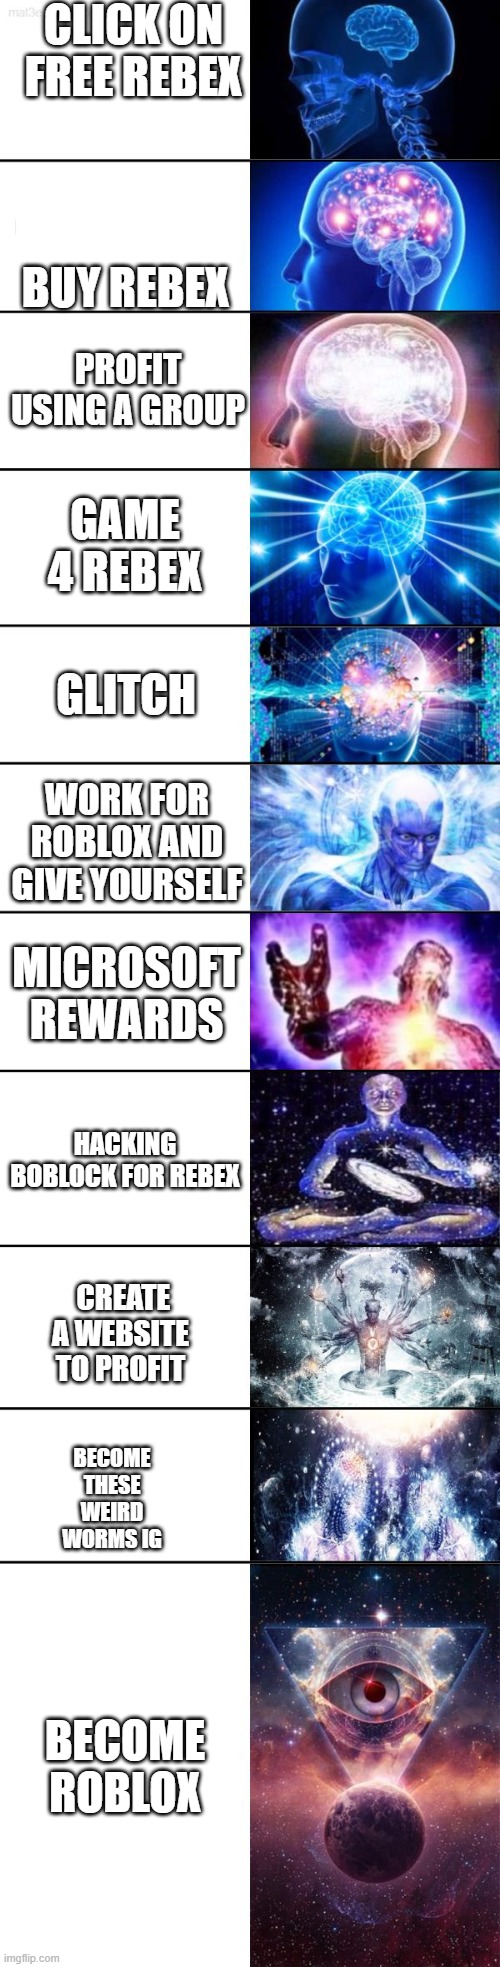 Microsoft Rewards - Imgflip